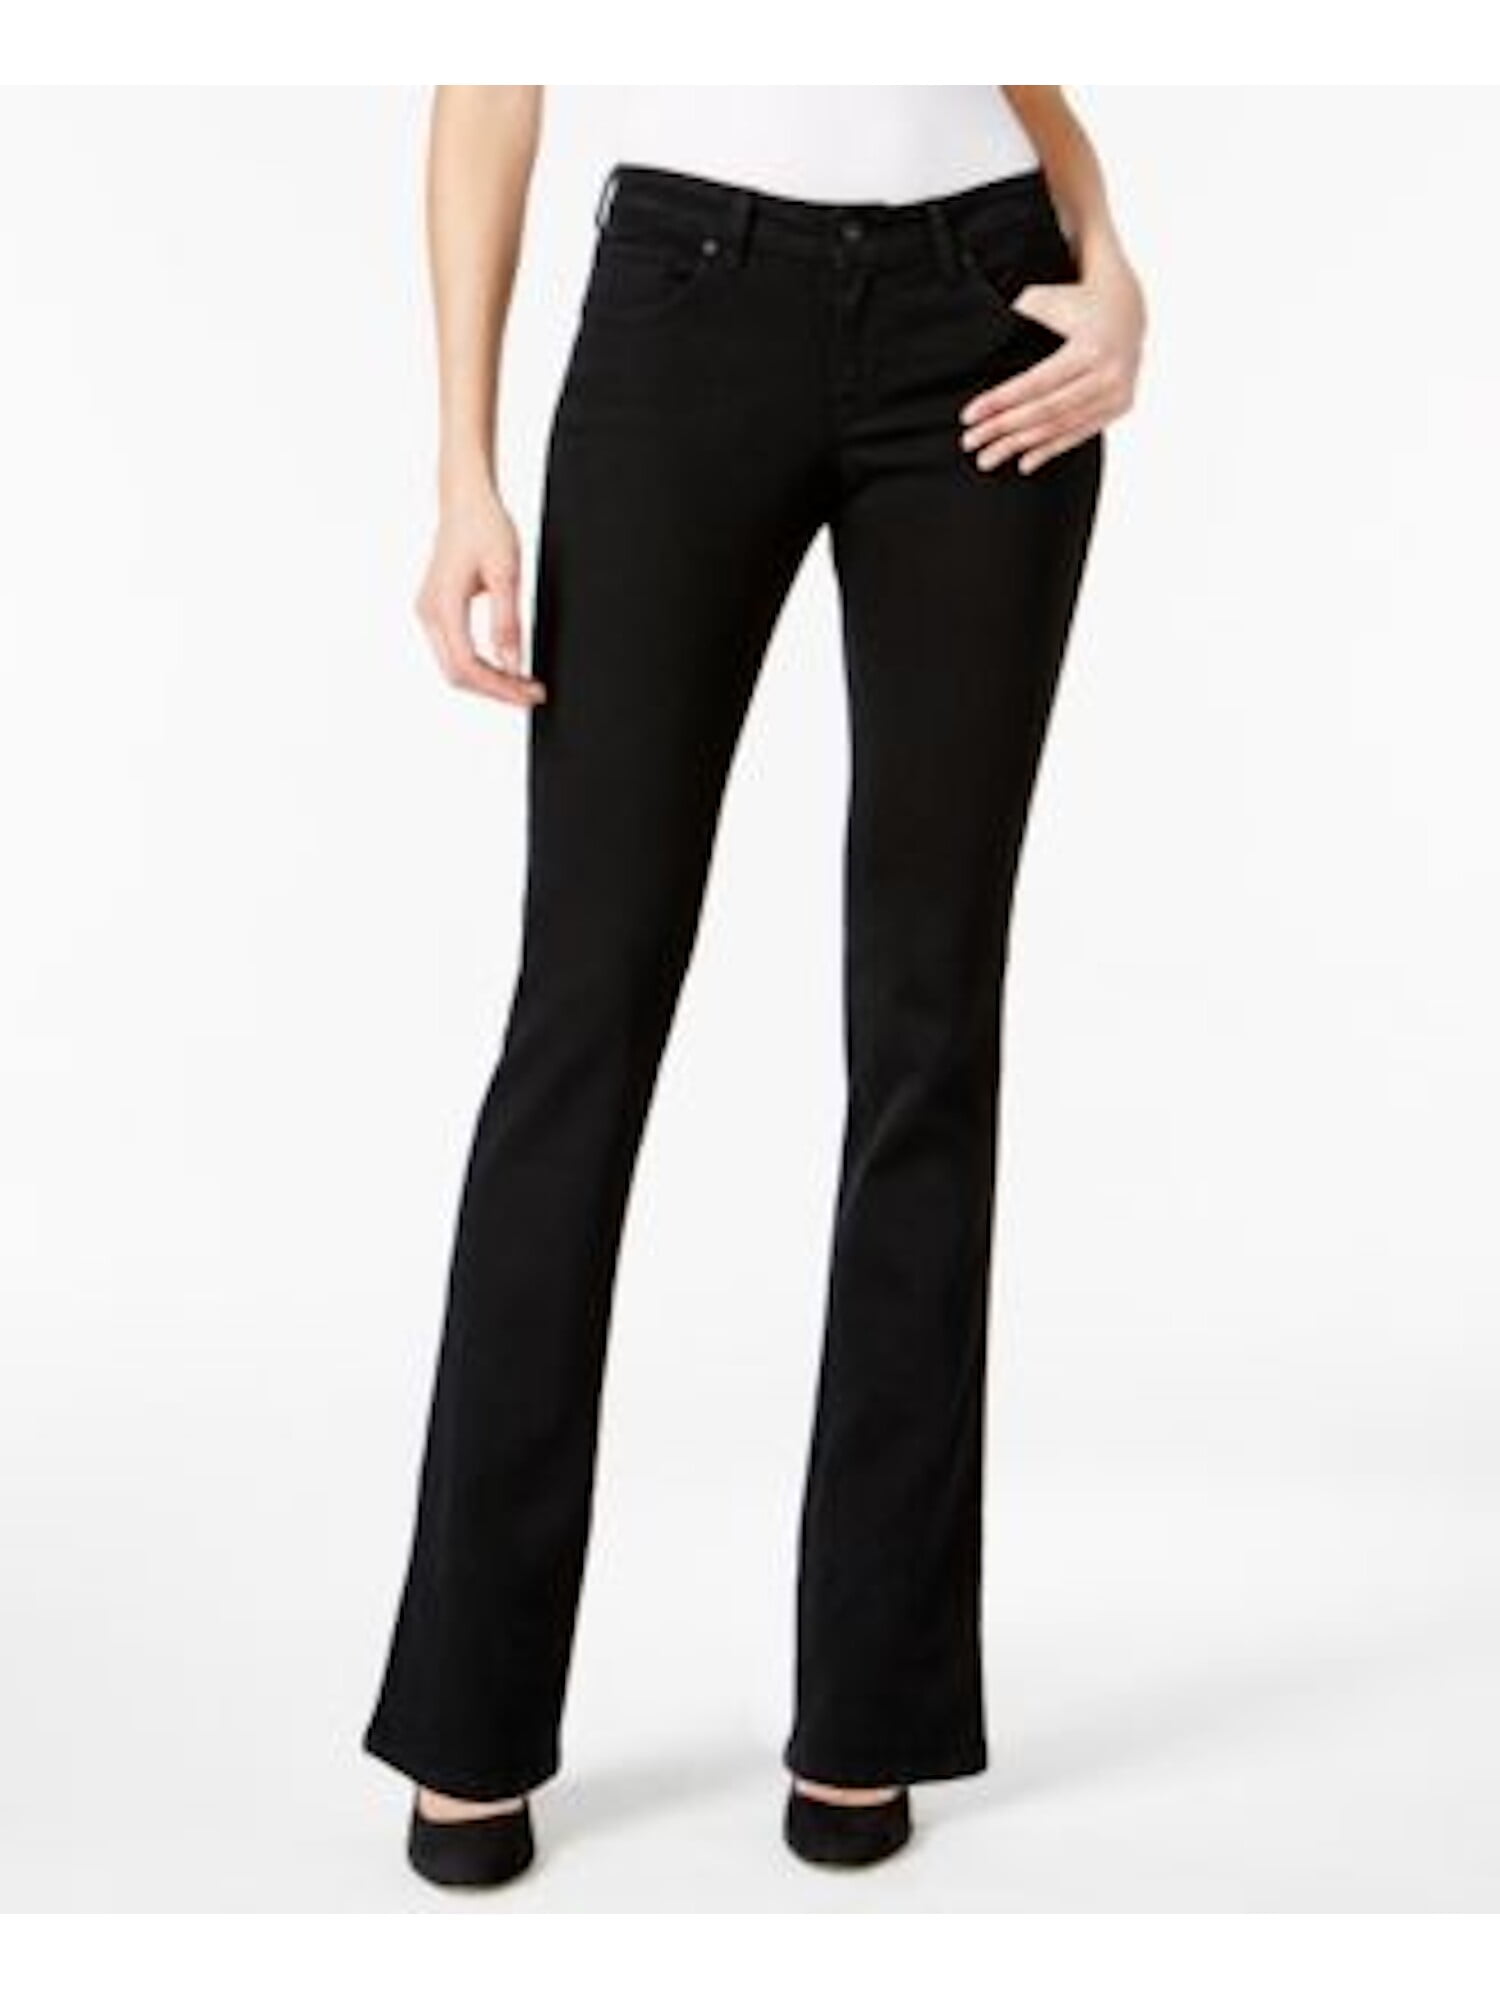 black jeans size 16